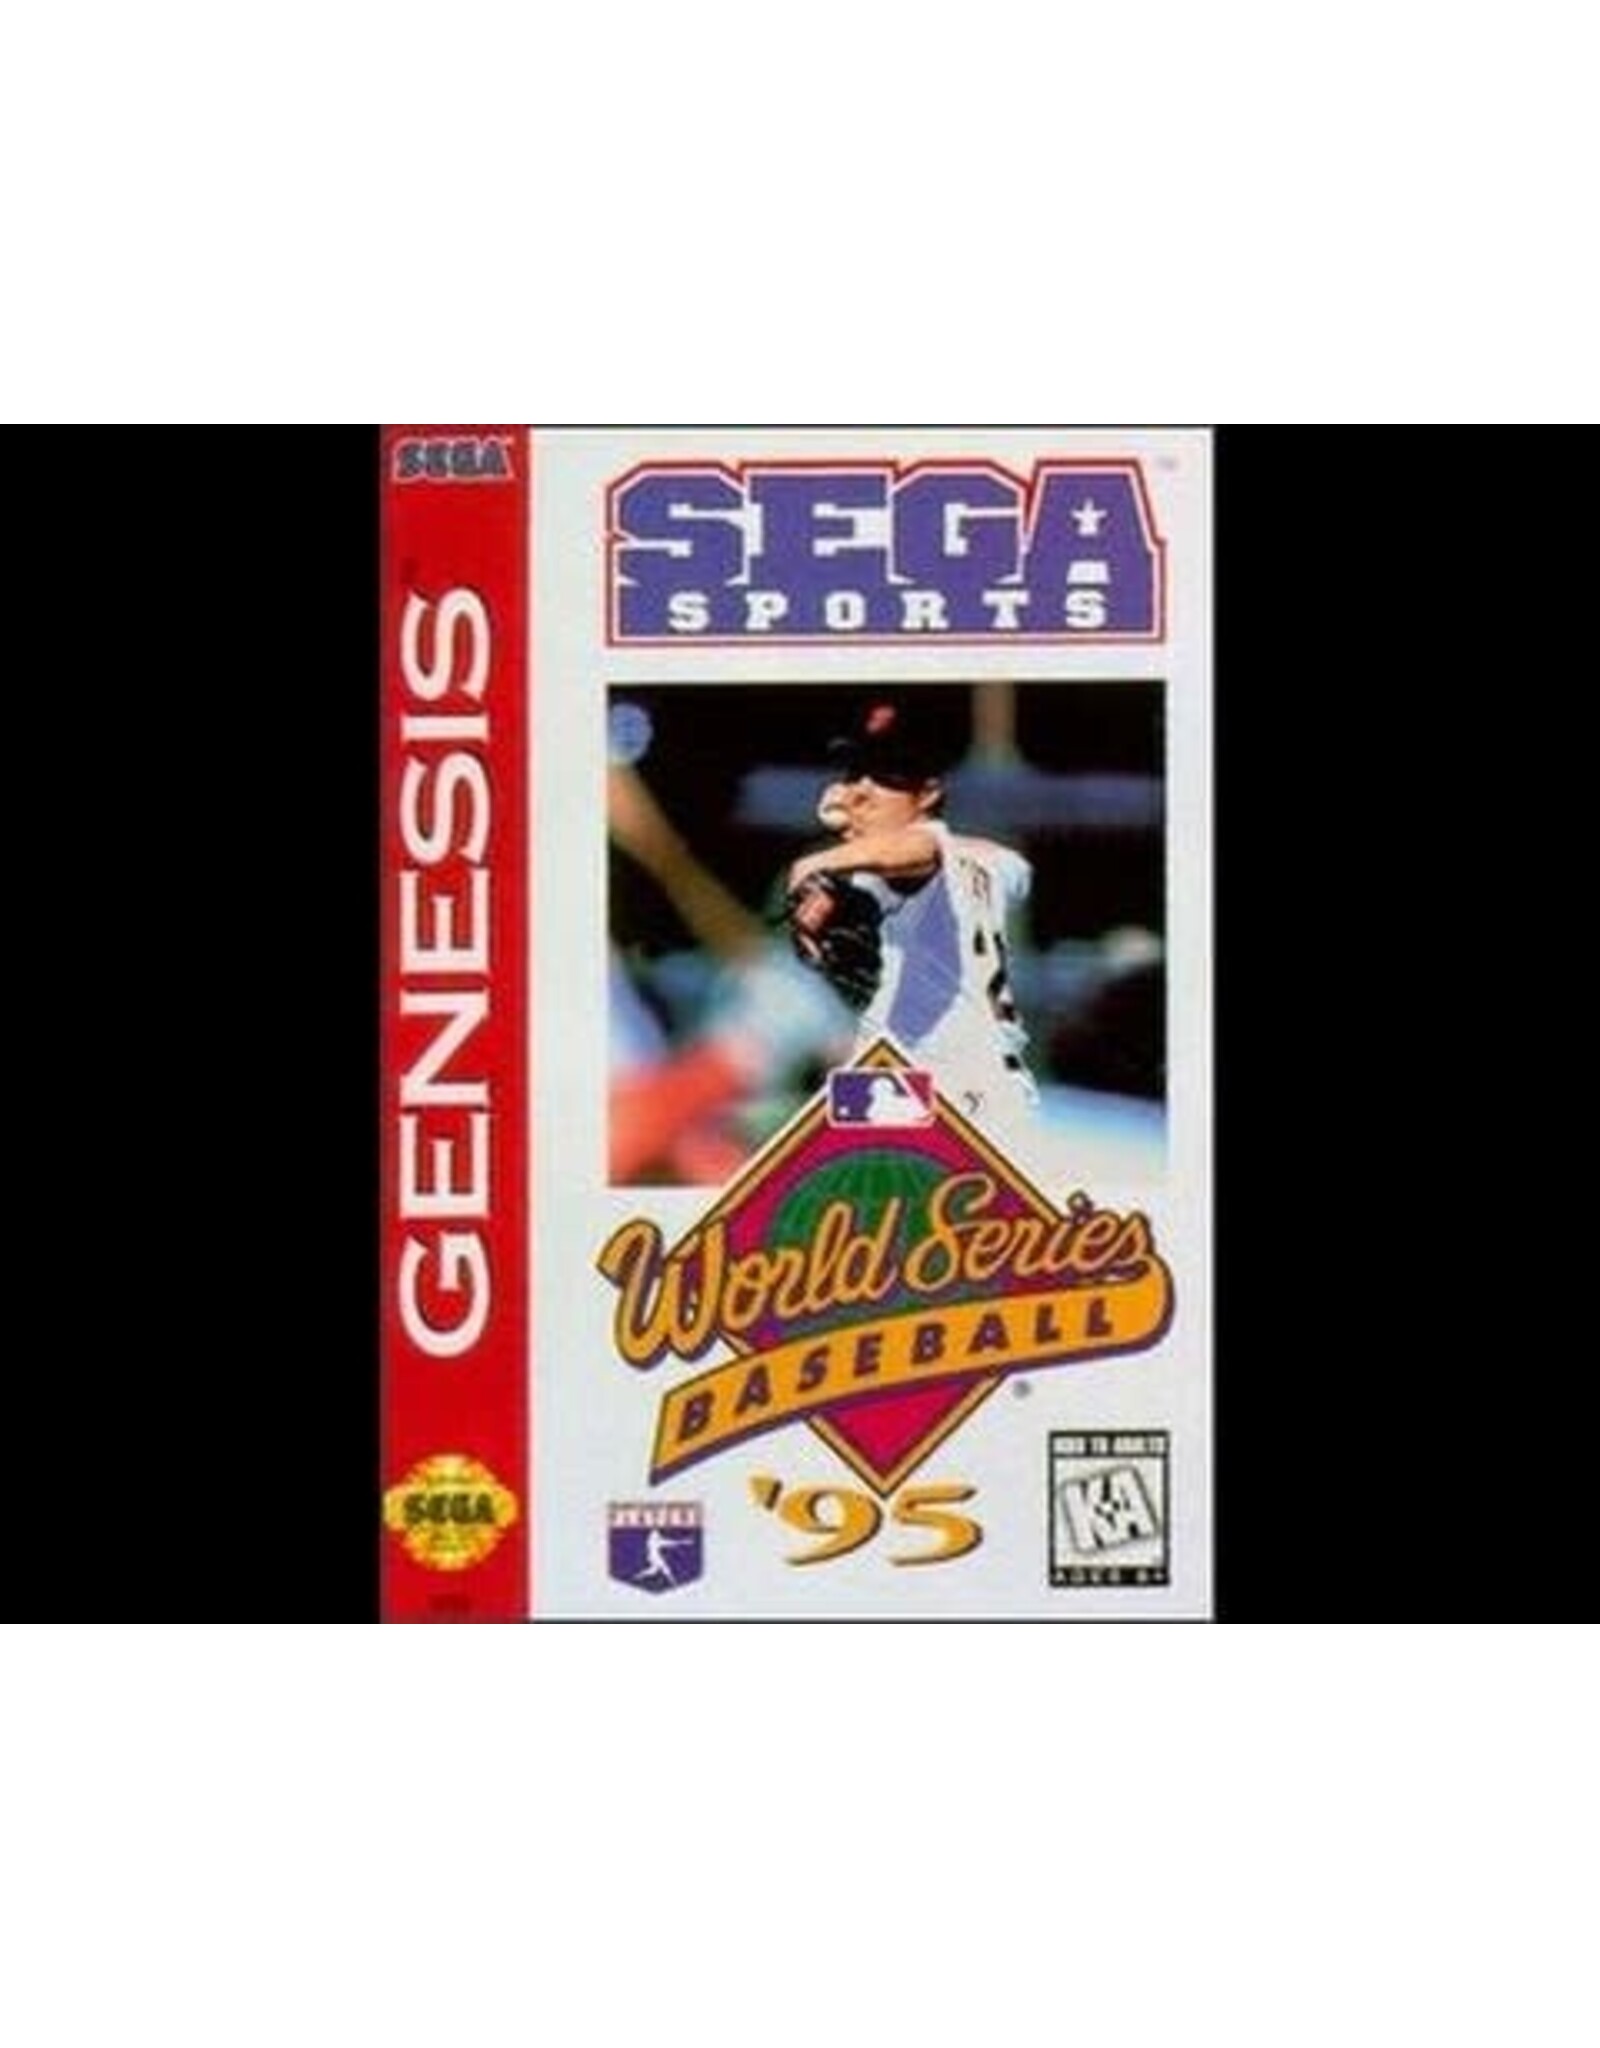 Sega Genesis World Series Baseball 95 (Cart Only)